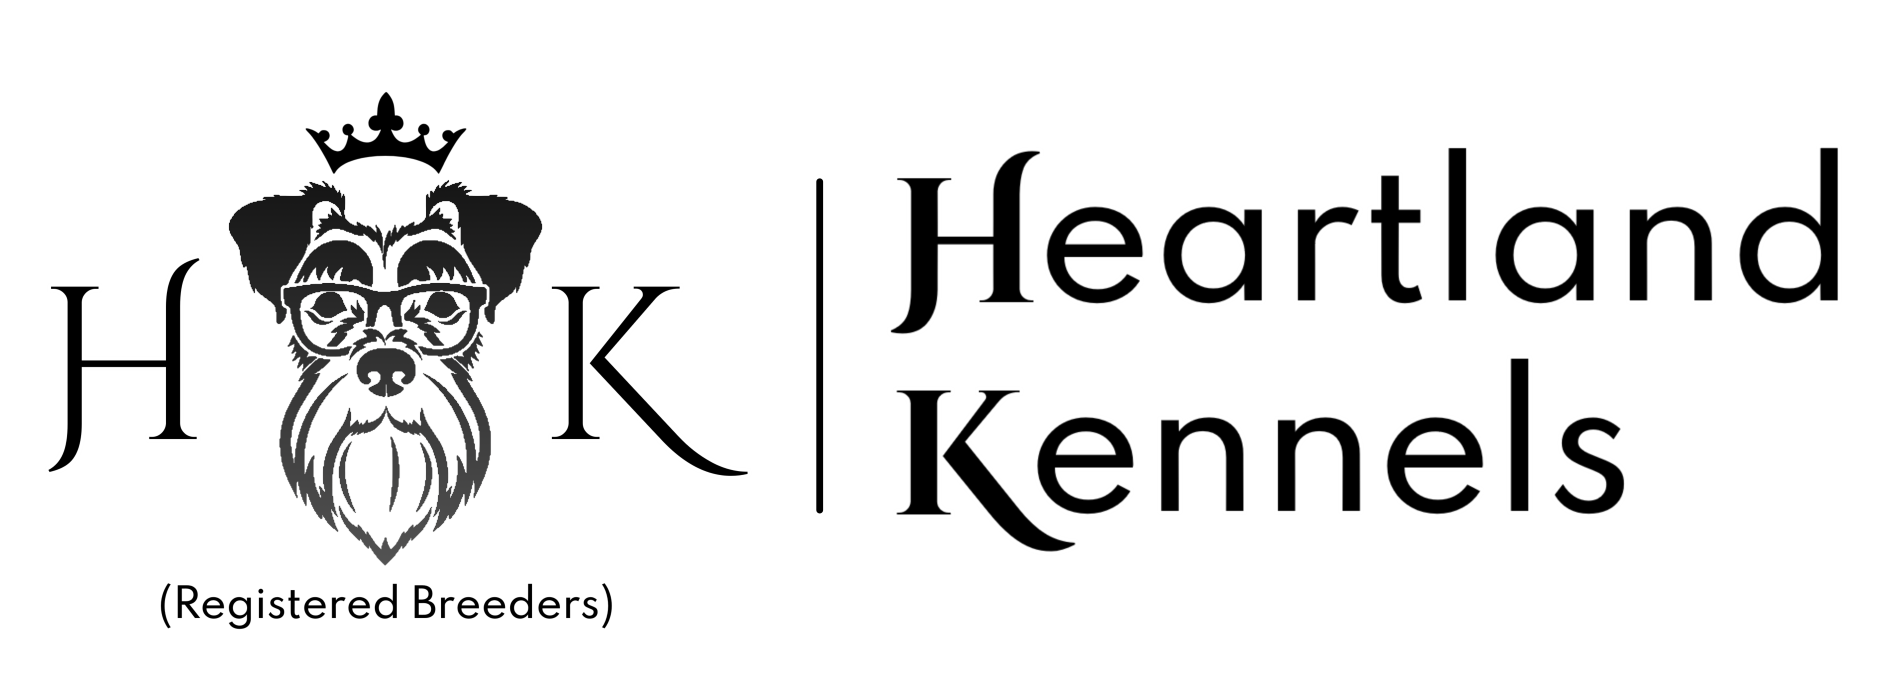 Heartland Kennels Logo1